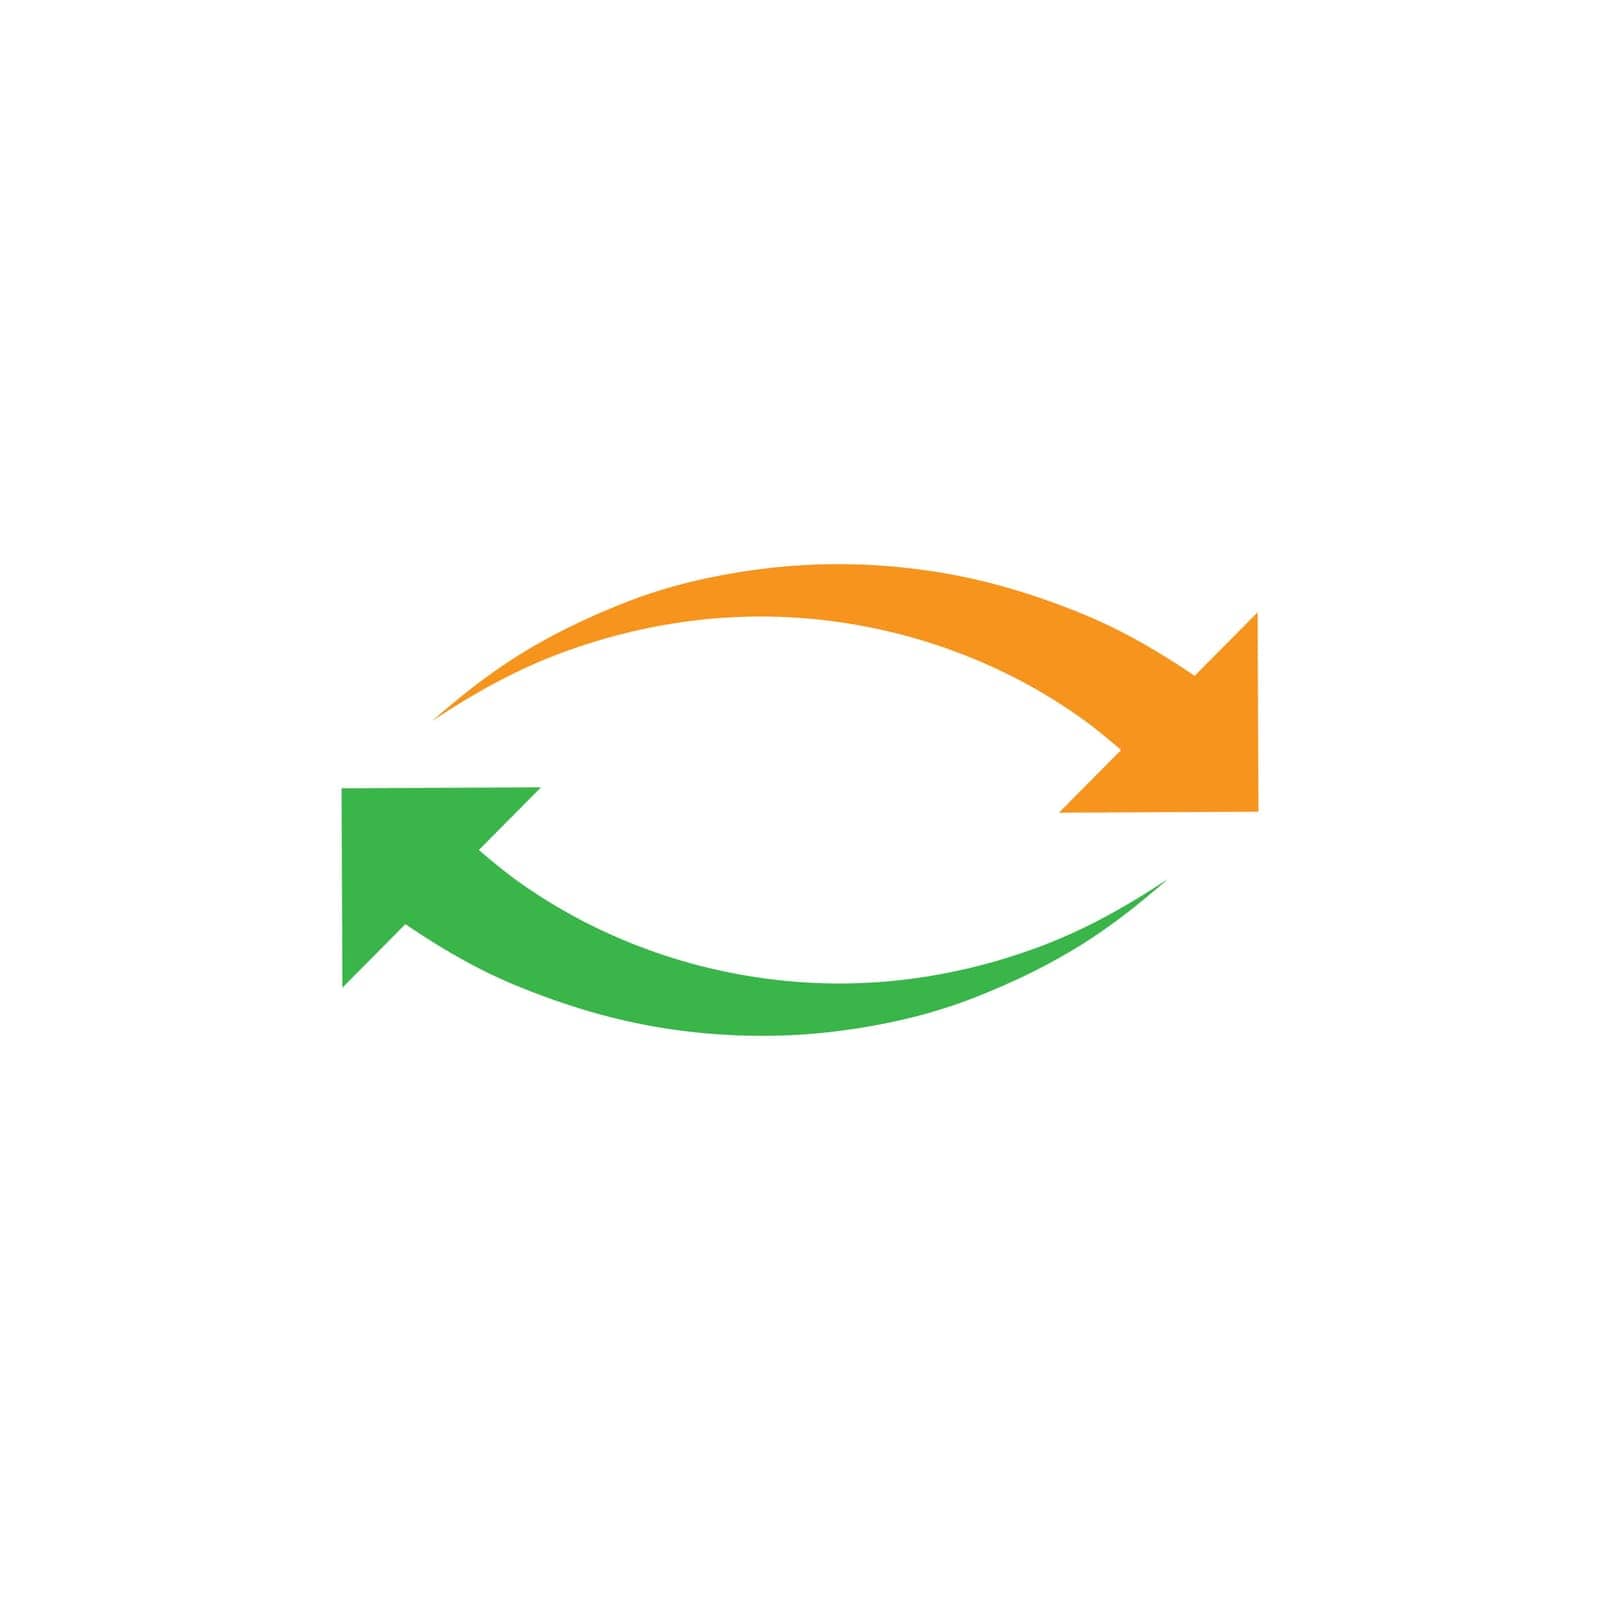 Reload arrow. Reset symbol. Vector arrow. Rotation arrow isolated.